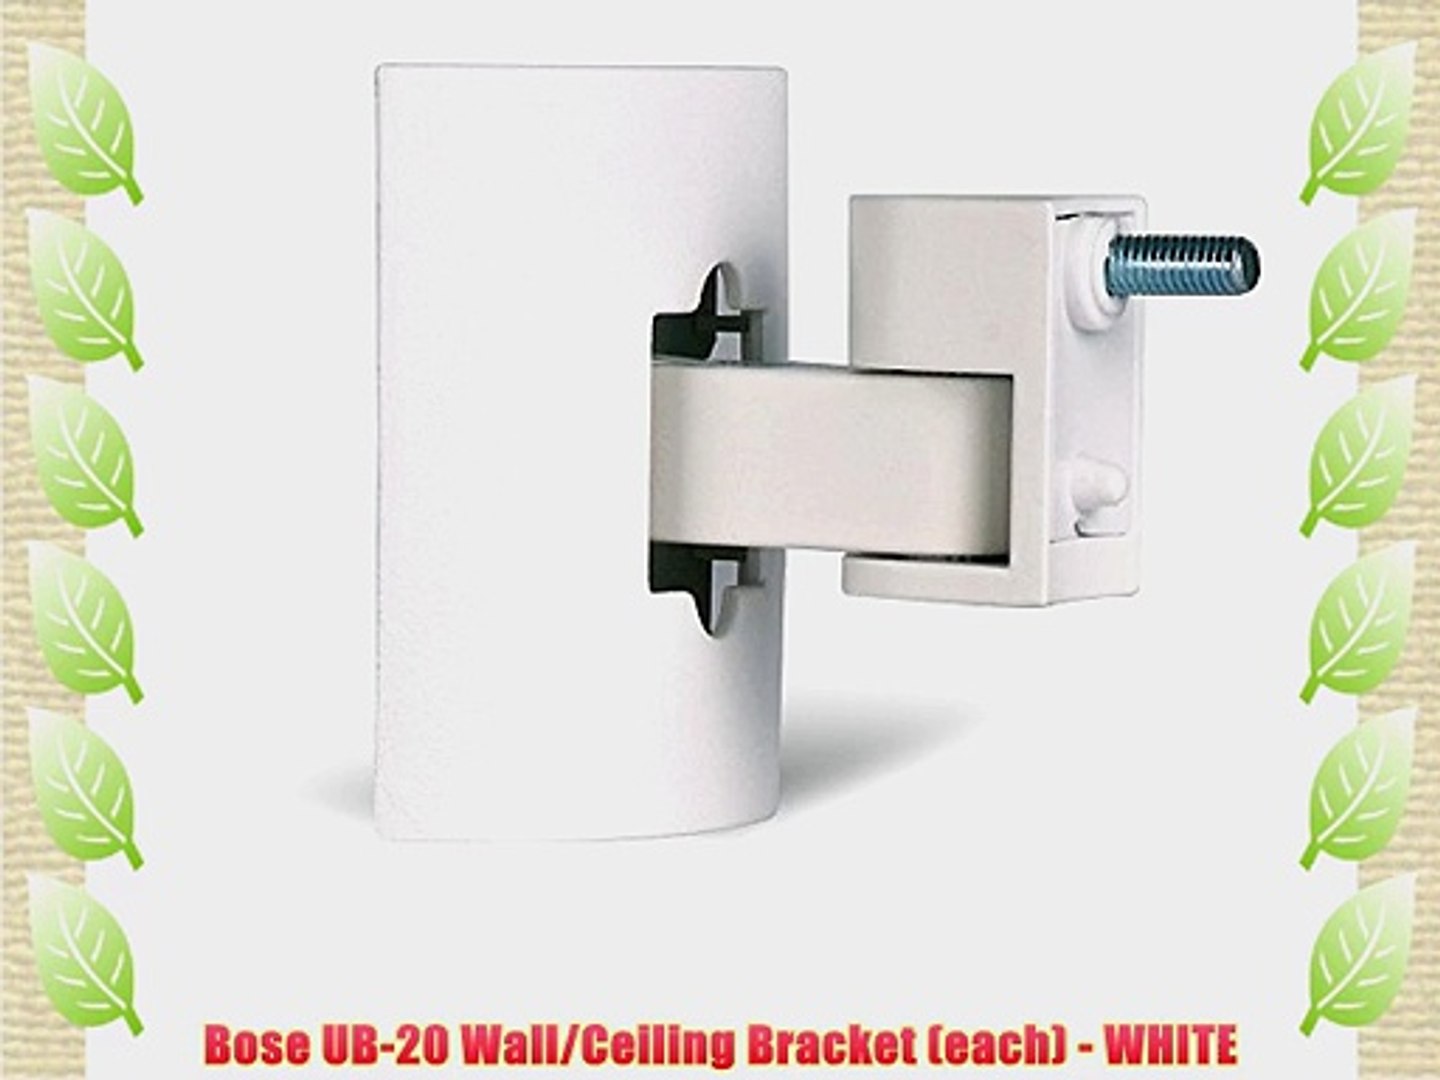 Bose Ub 20 Wall Ceiling Bracket Each White Video Dailymotion